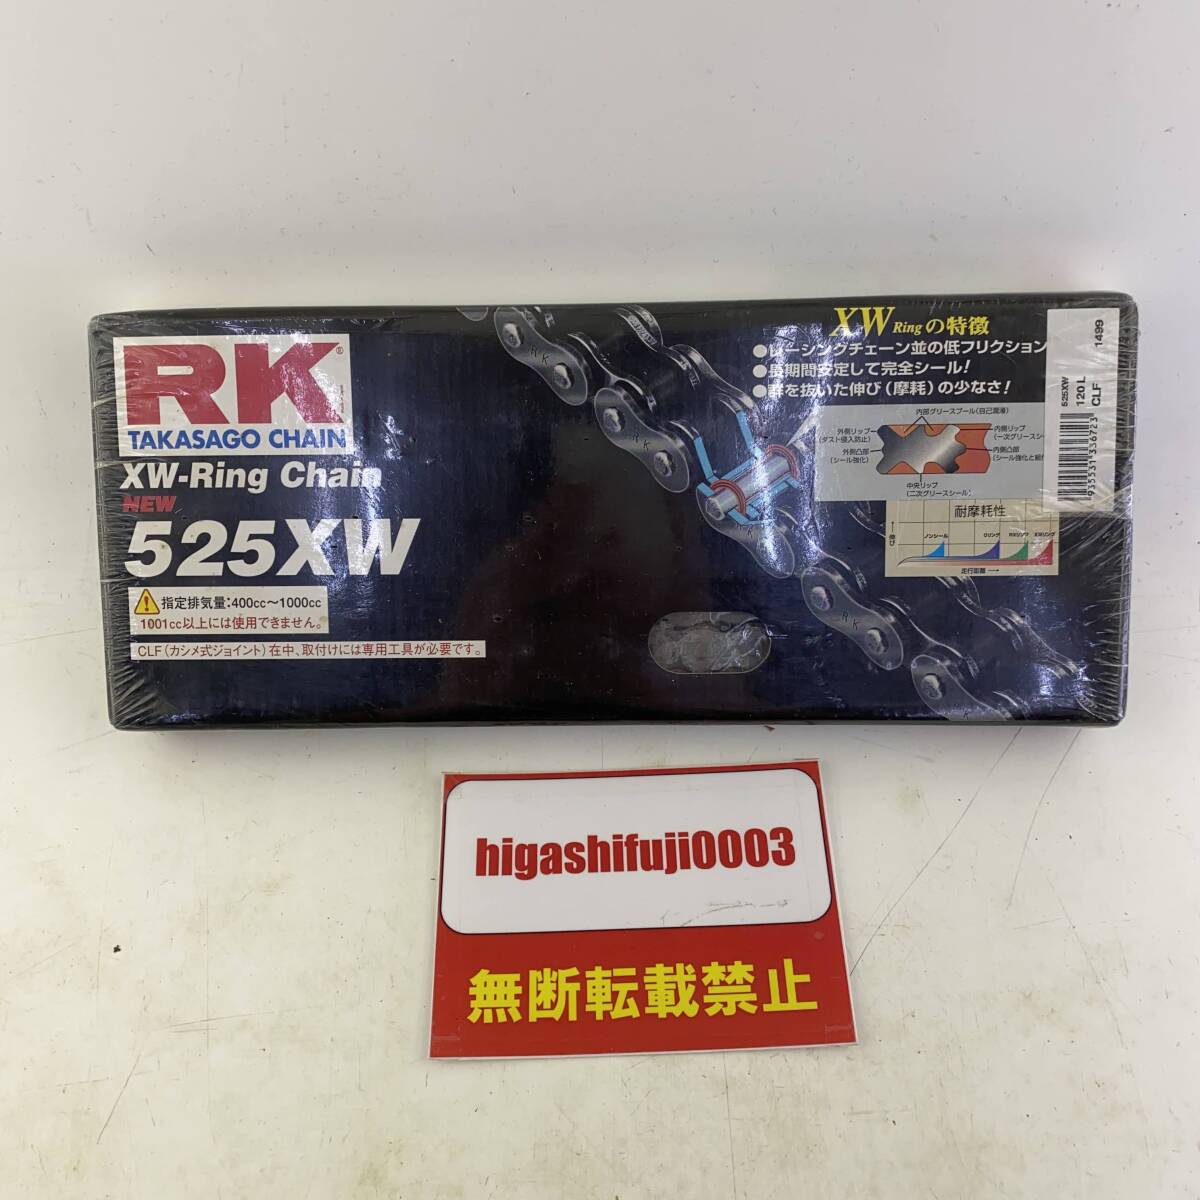 RK TAKASAGO CHAIN XW-Ring Chain NEW 525XW [未開封品] 二輪車用ドライブチェーンの画像1